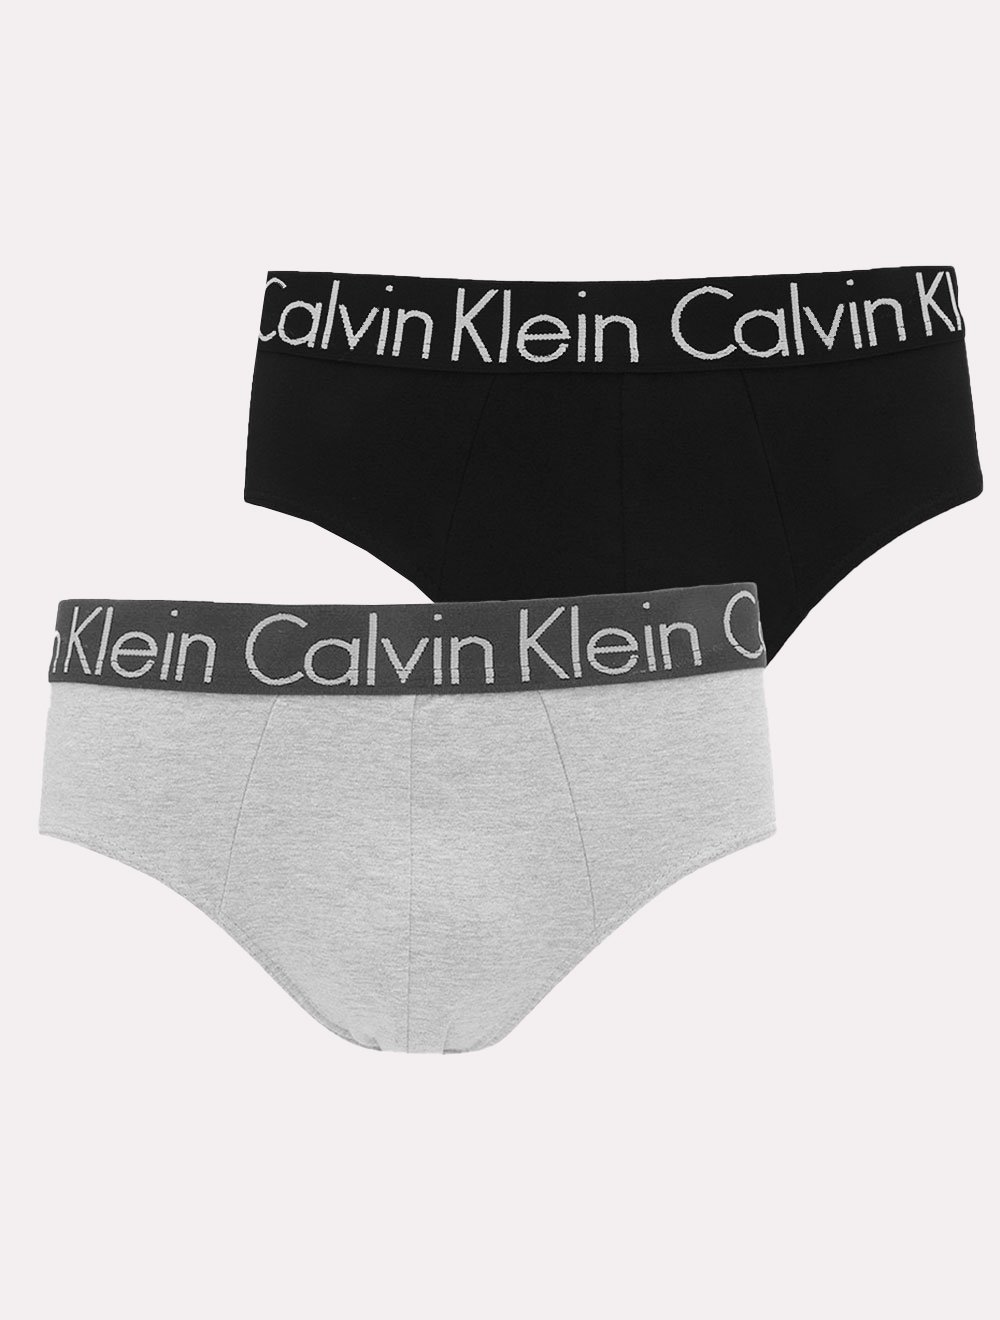 Cueca Calvin Klein Brief Cotton Stretch Preta e Cinza Pack C11.03 CZ05 2UN